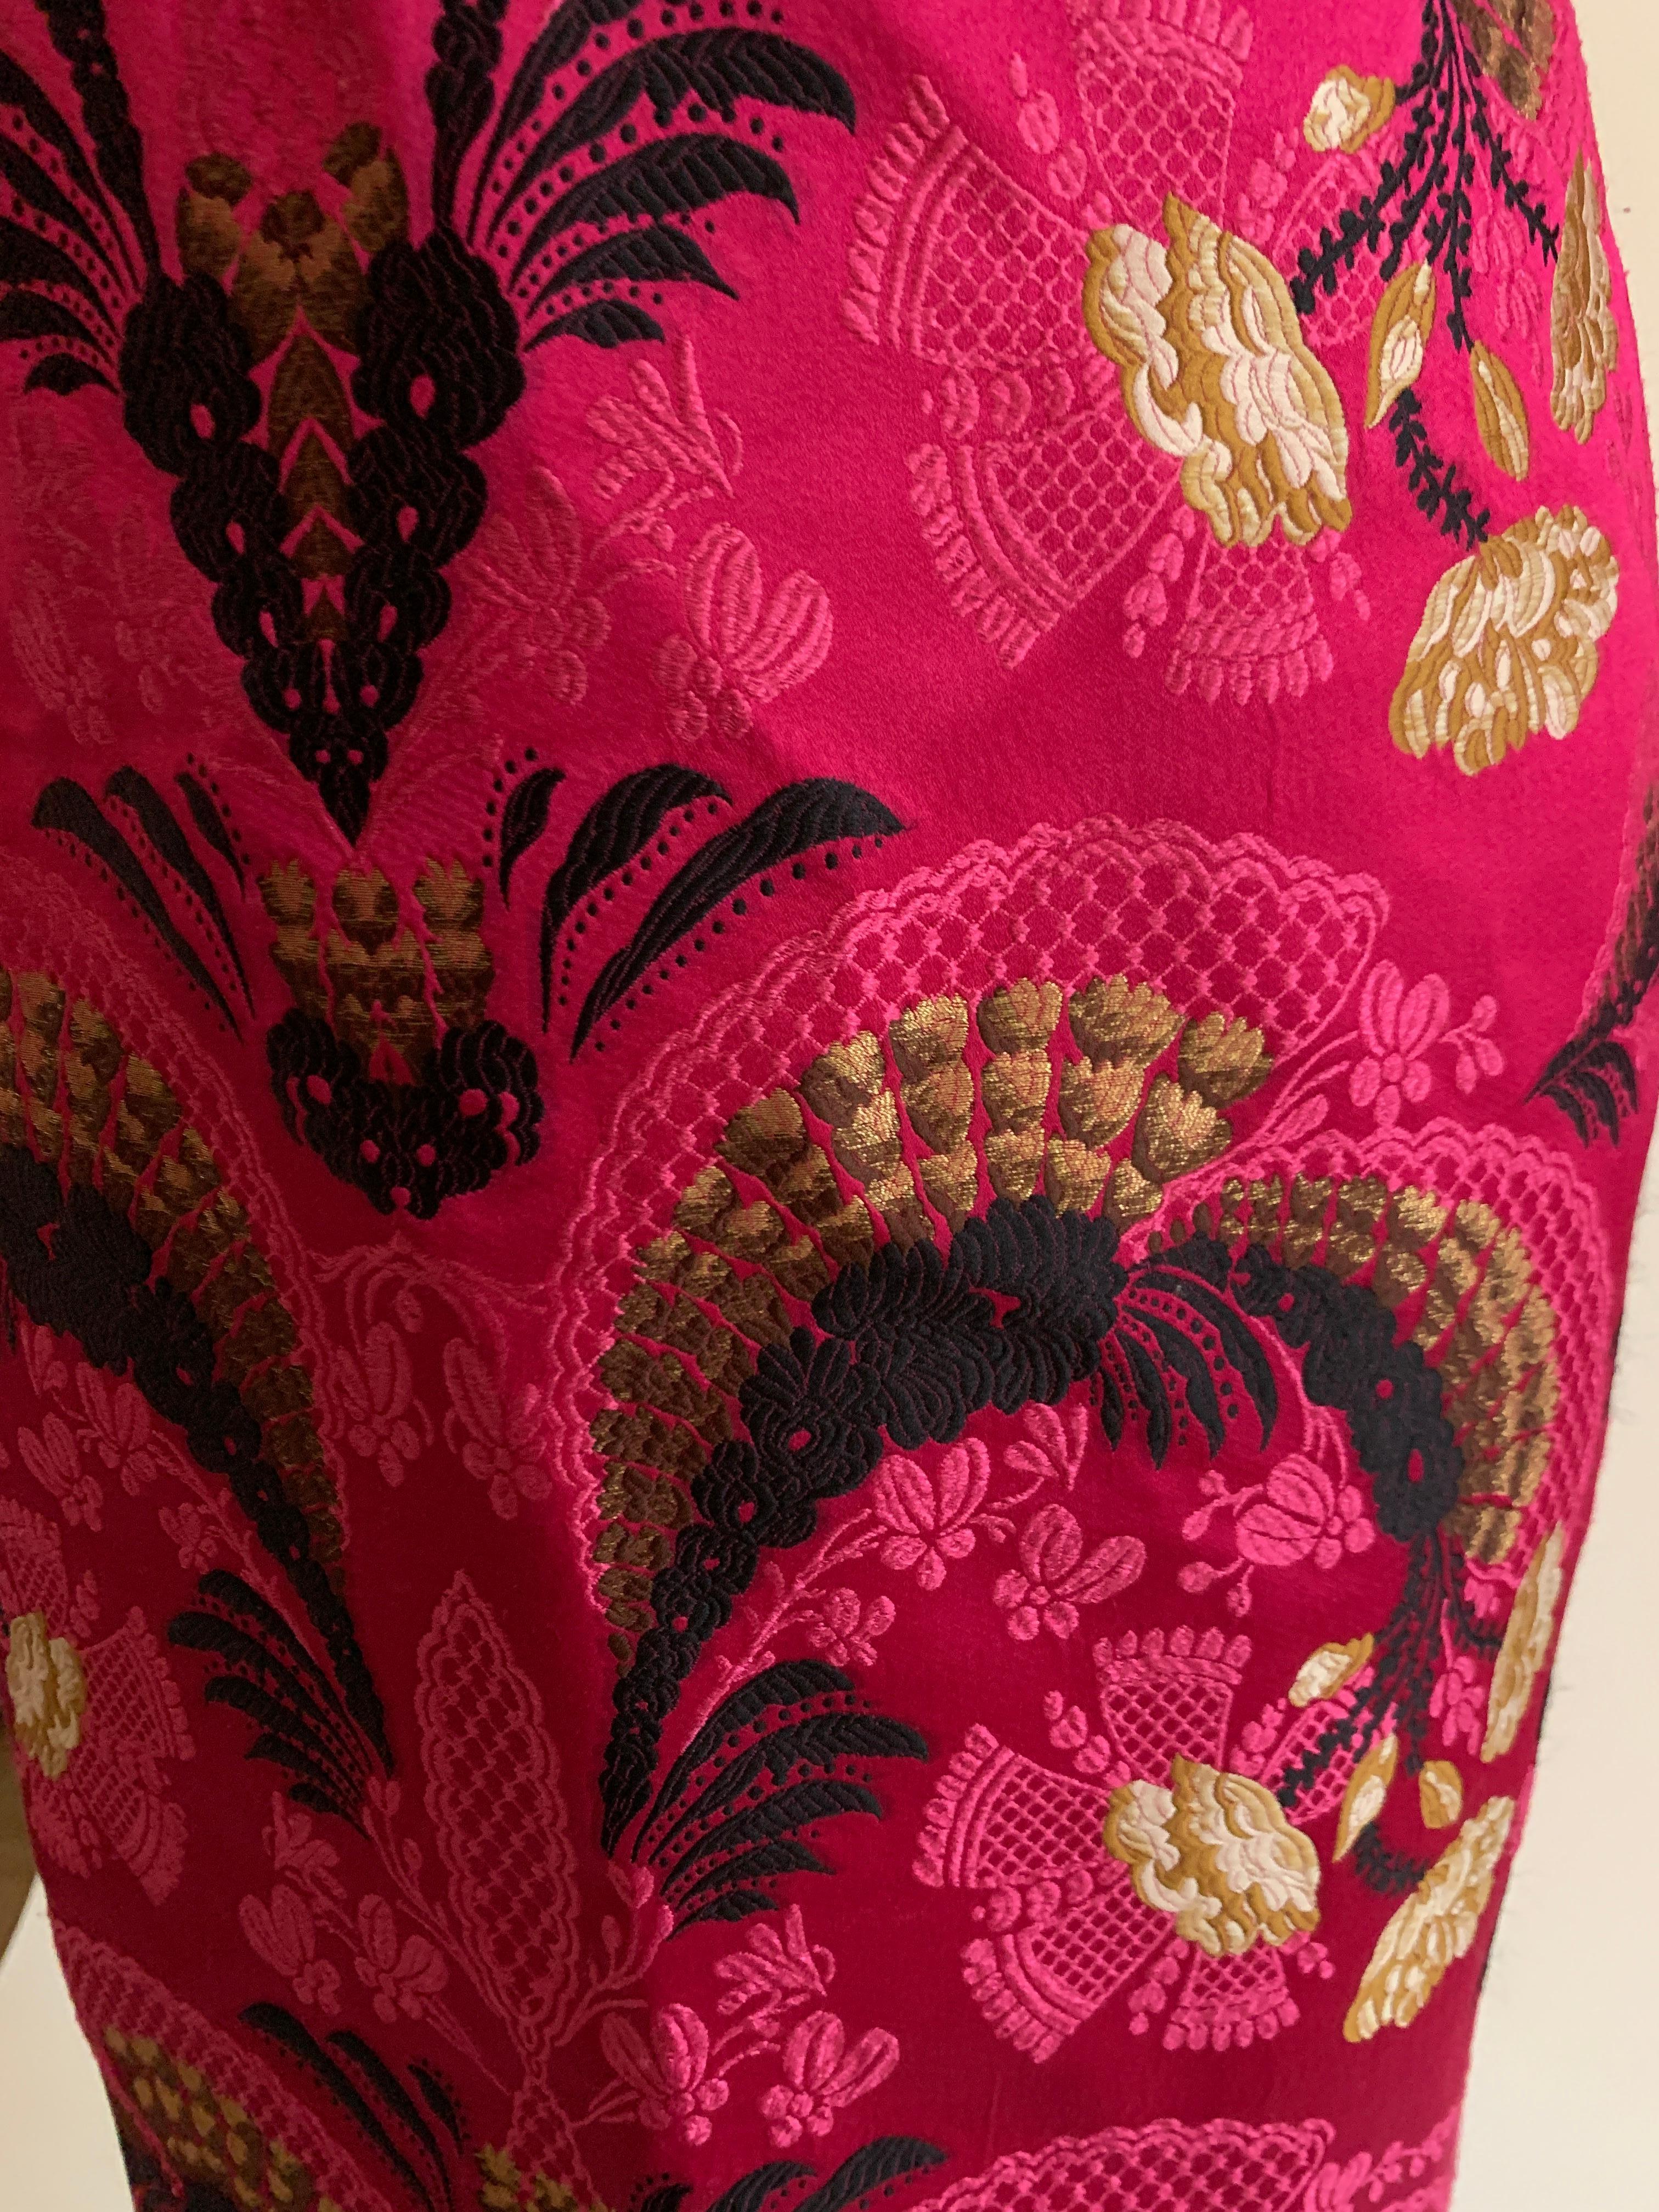 Alexander Mcqueen Brocade Dress in Magenta Pink, Black and Gold Floral Print 2